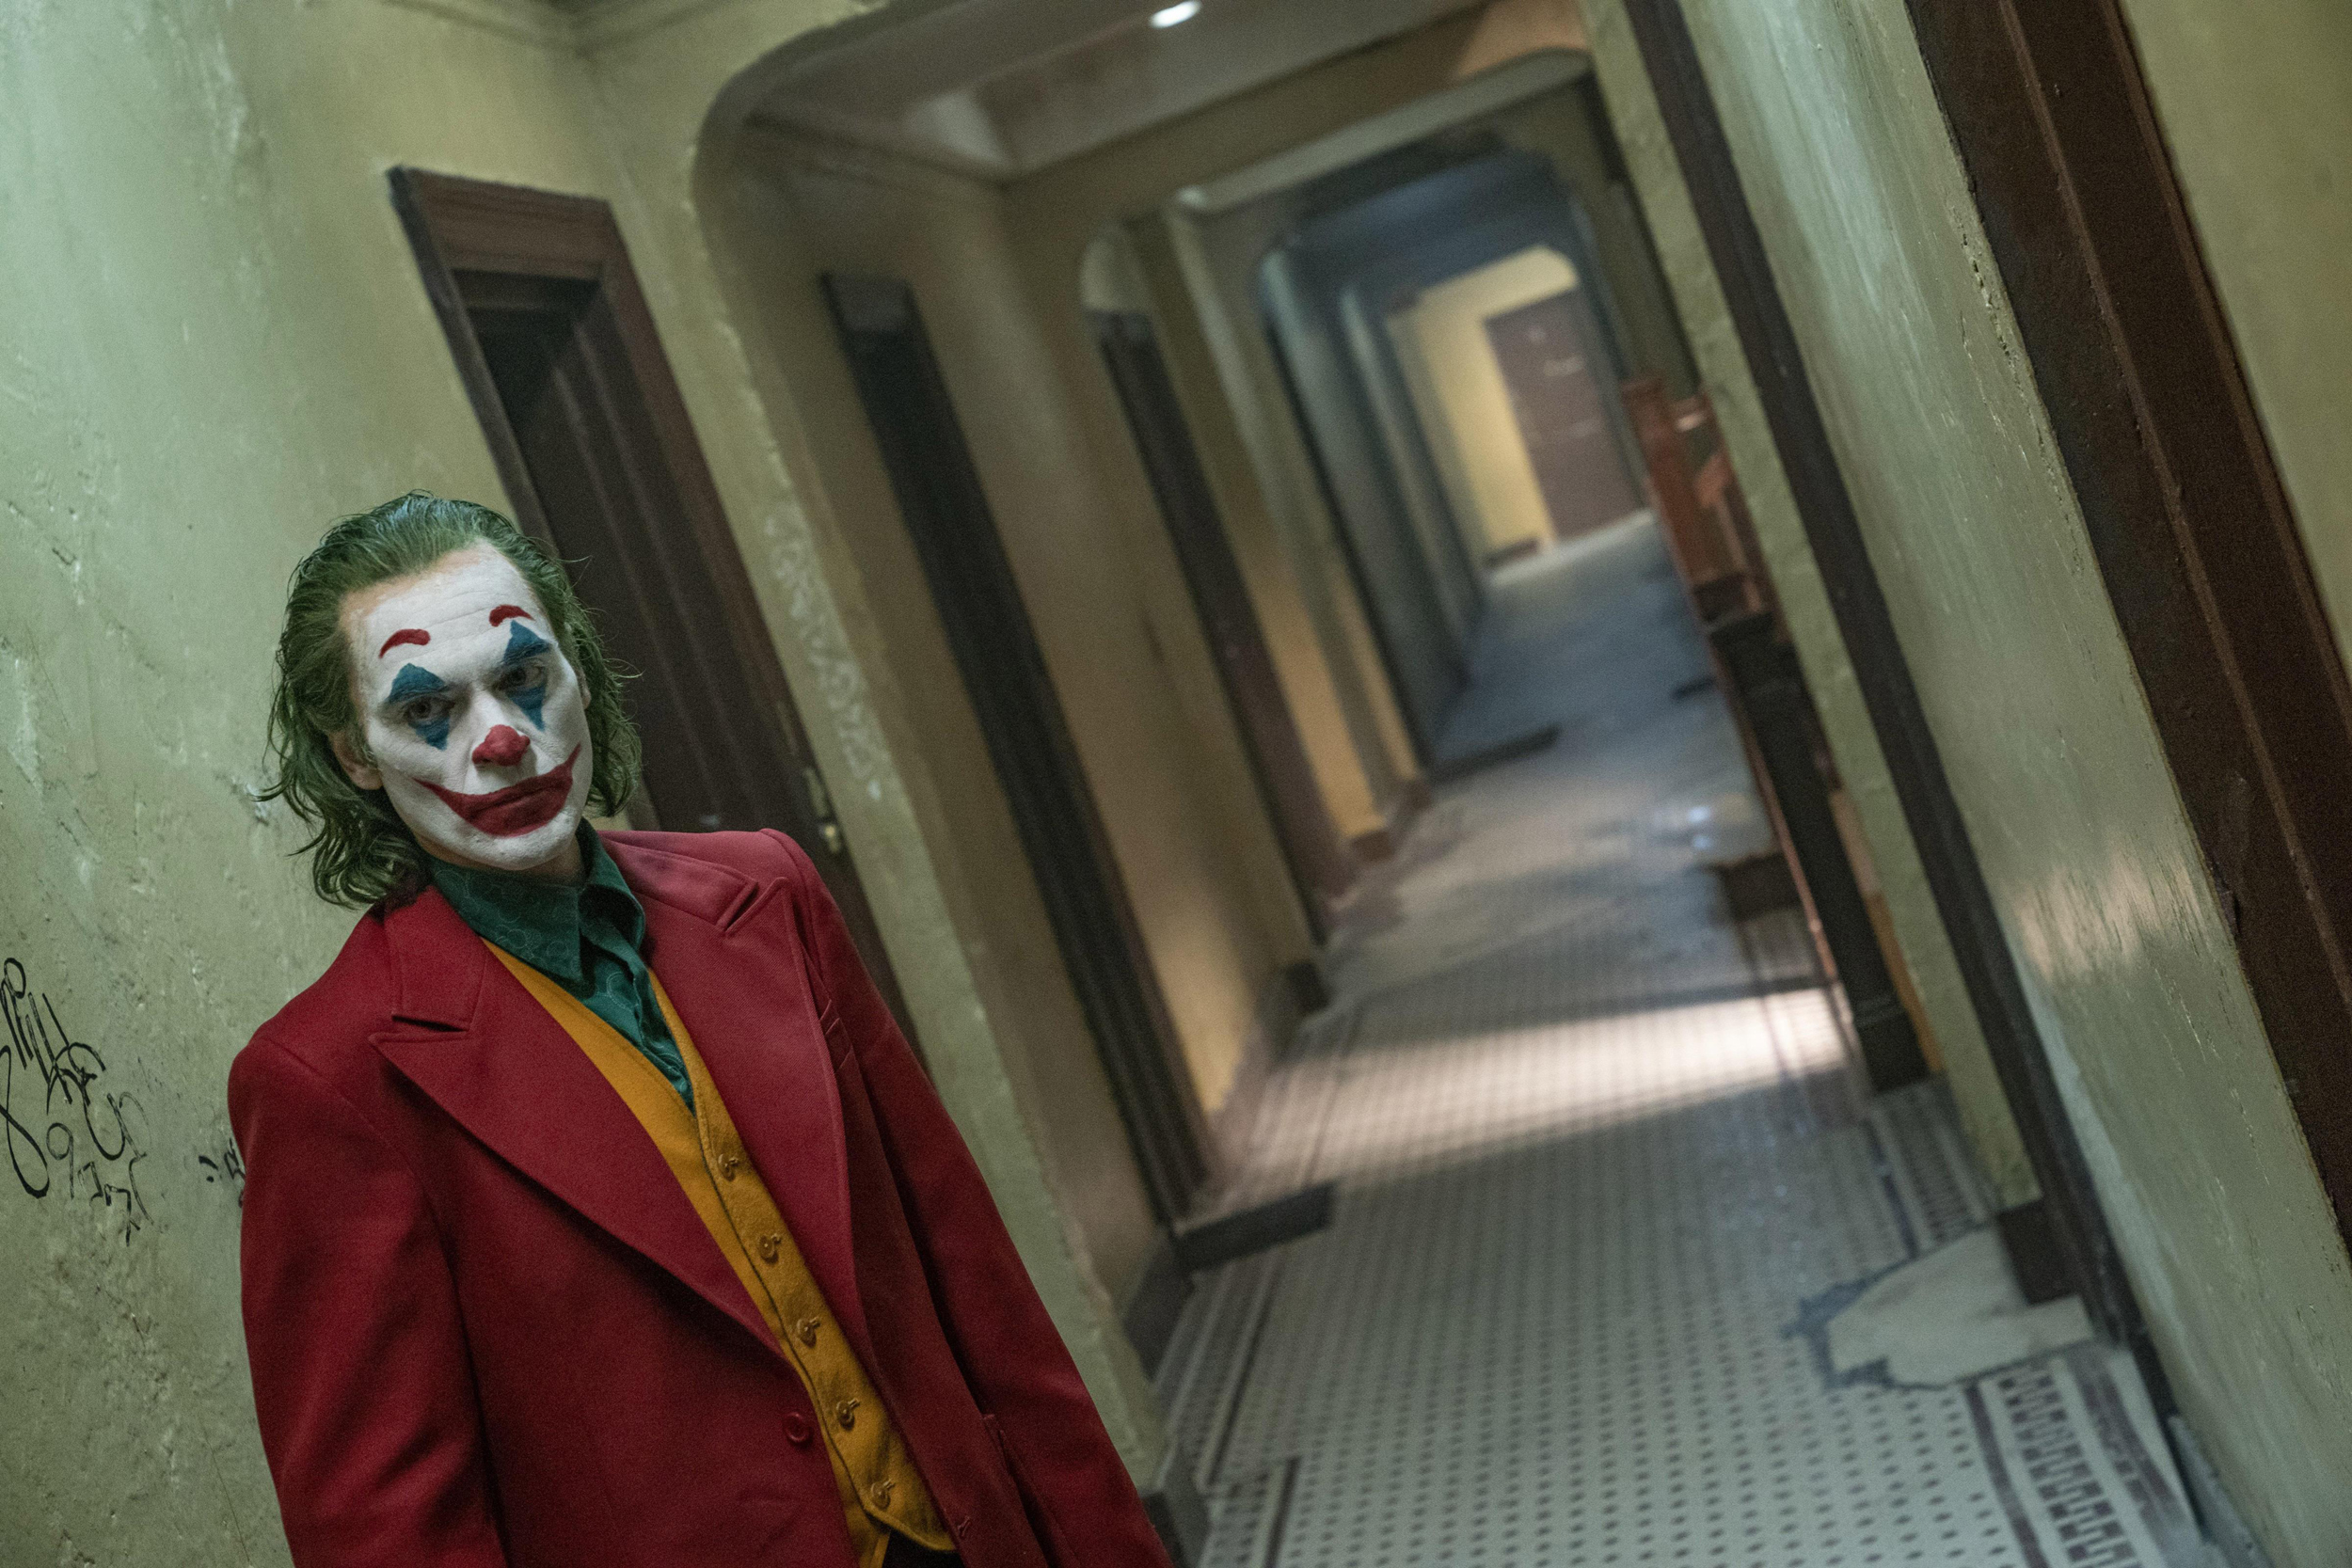 Joker (2019) Still - Joaquin Phoenix as Arthur Fleck / The Joker - Joker (2019) Photo ...